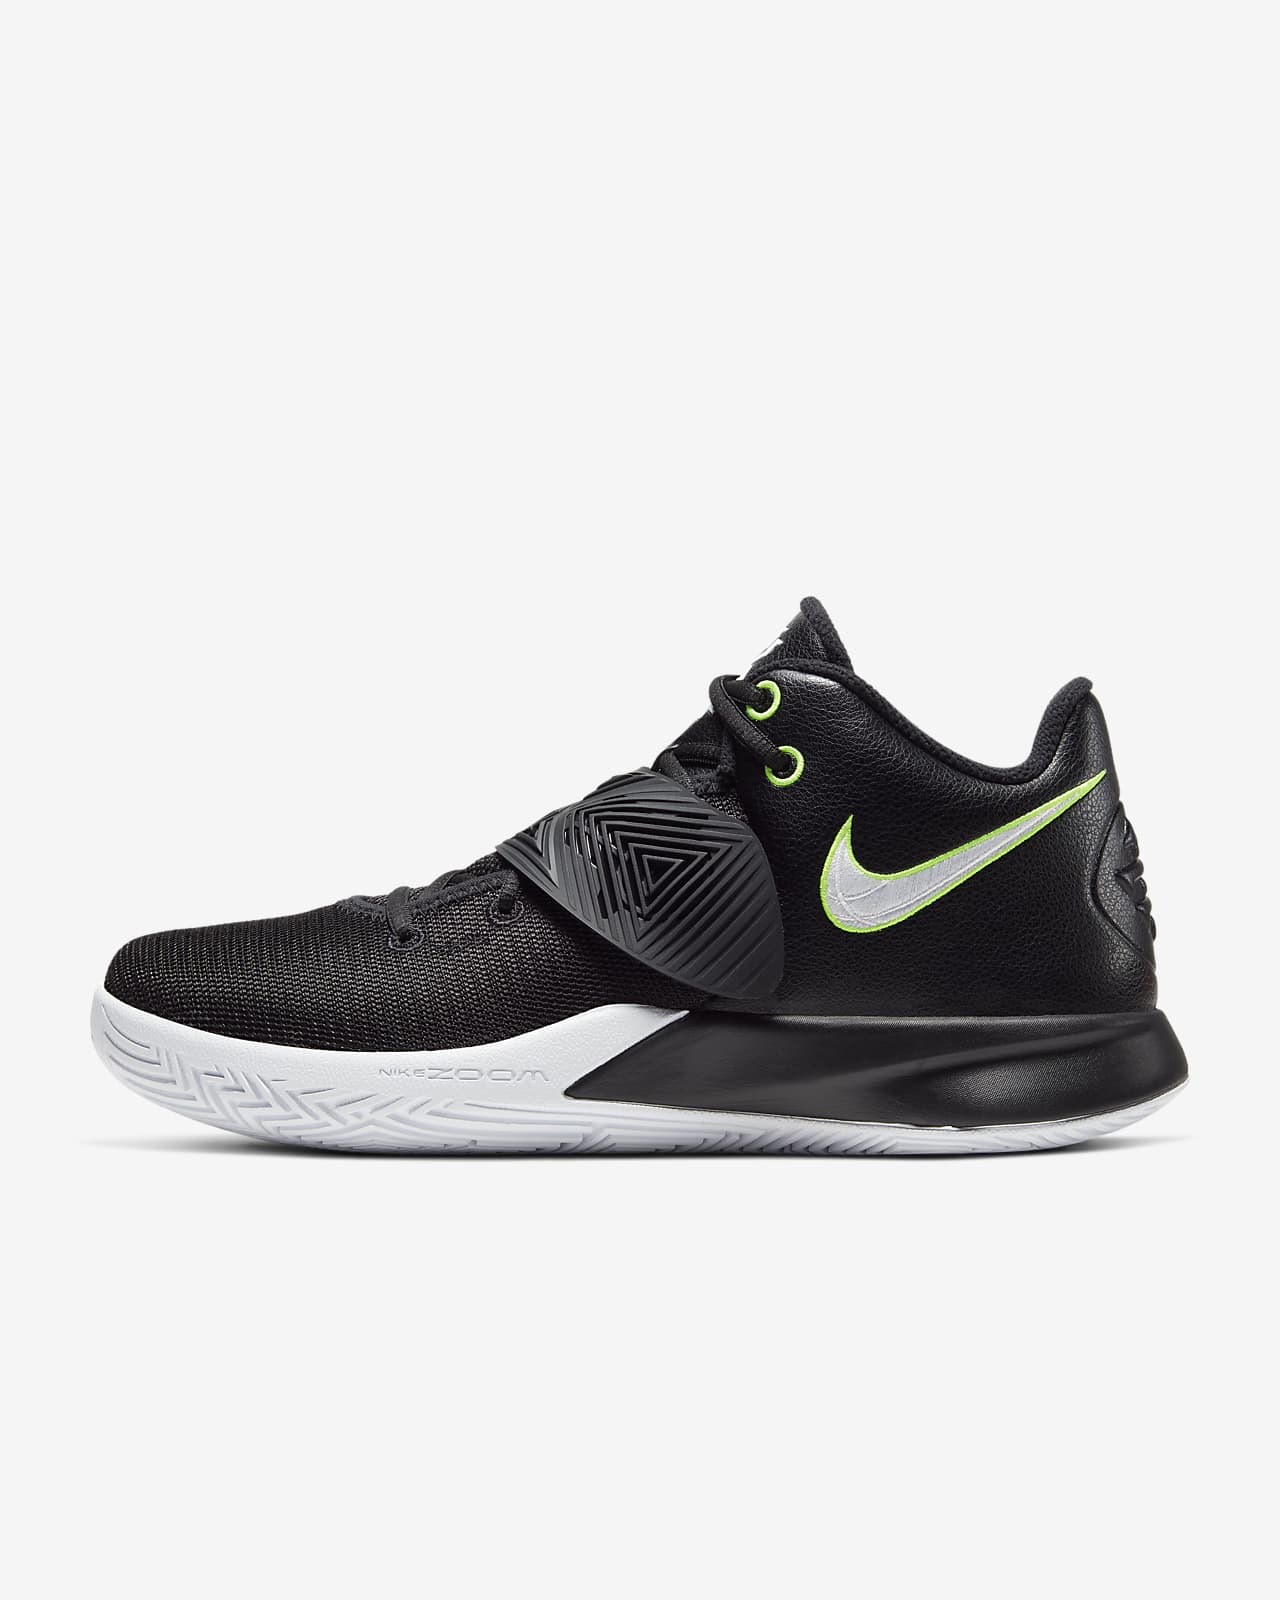 Kyrie Flytrap 3 Basketball Shoe. Nike CA